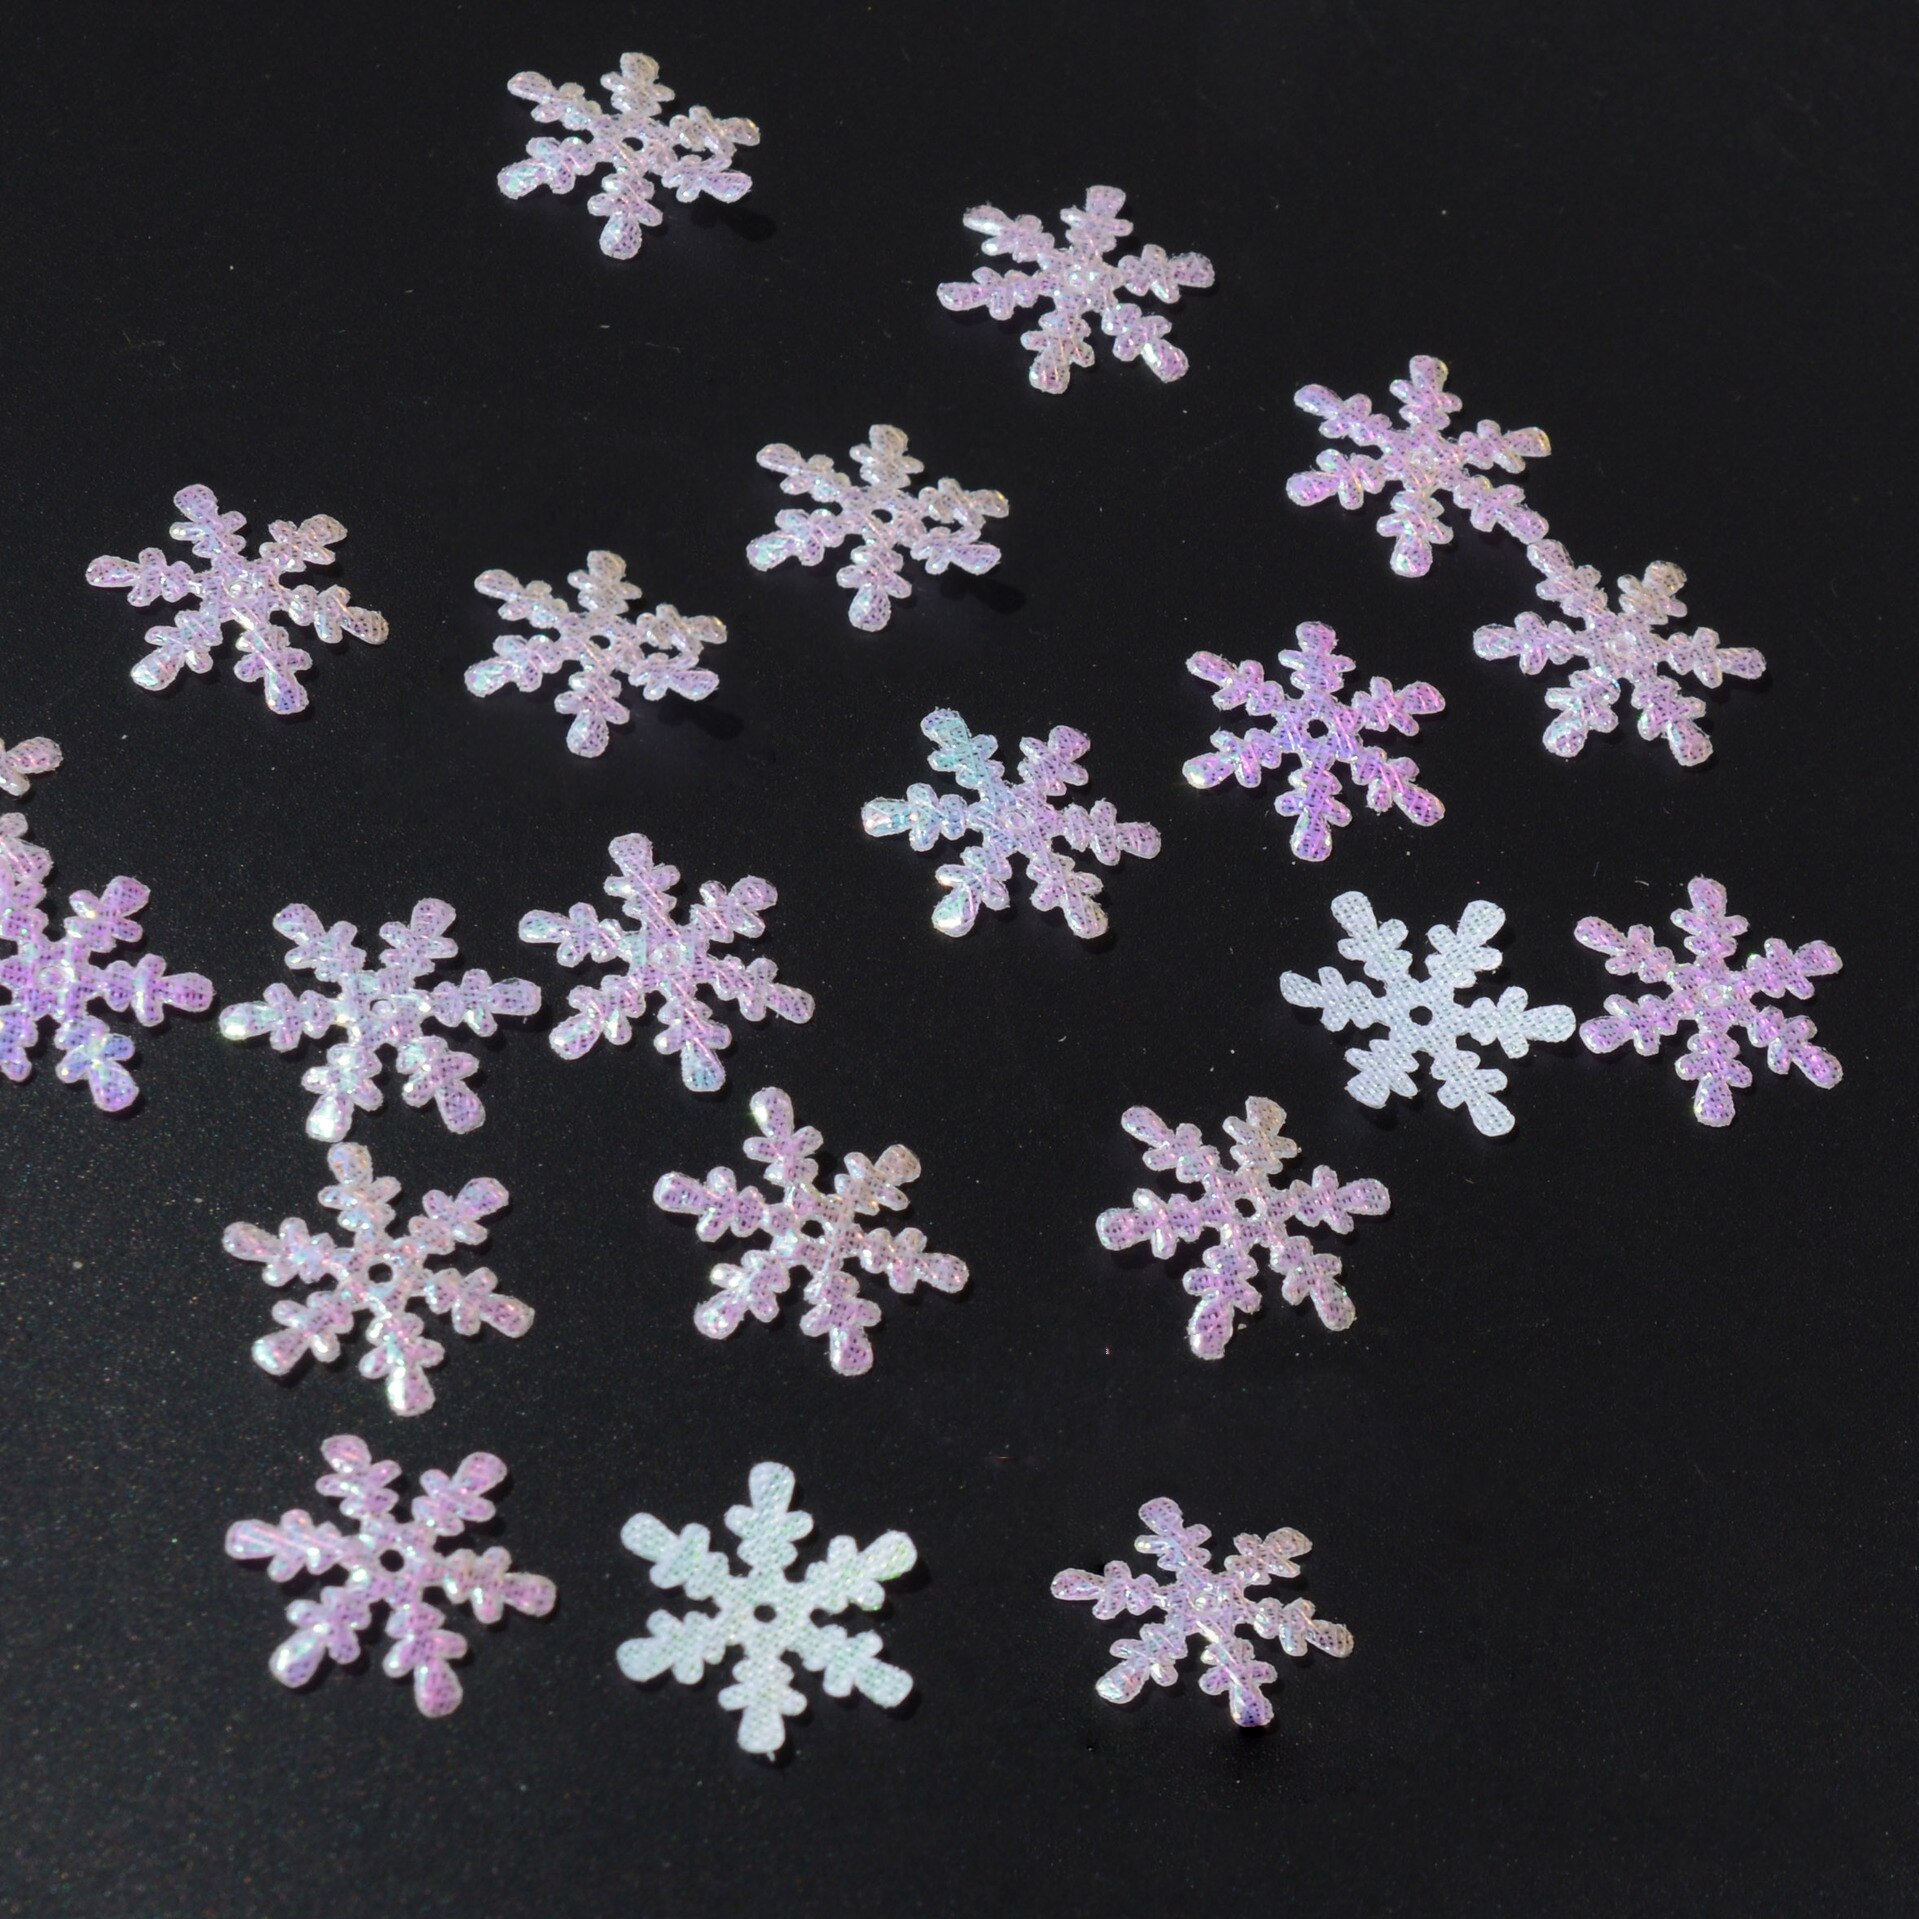 500 stk 25mm kunstige jule snefnug bord konfetti klud sne kort konfetti gør julepynt tilbehør dekor